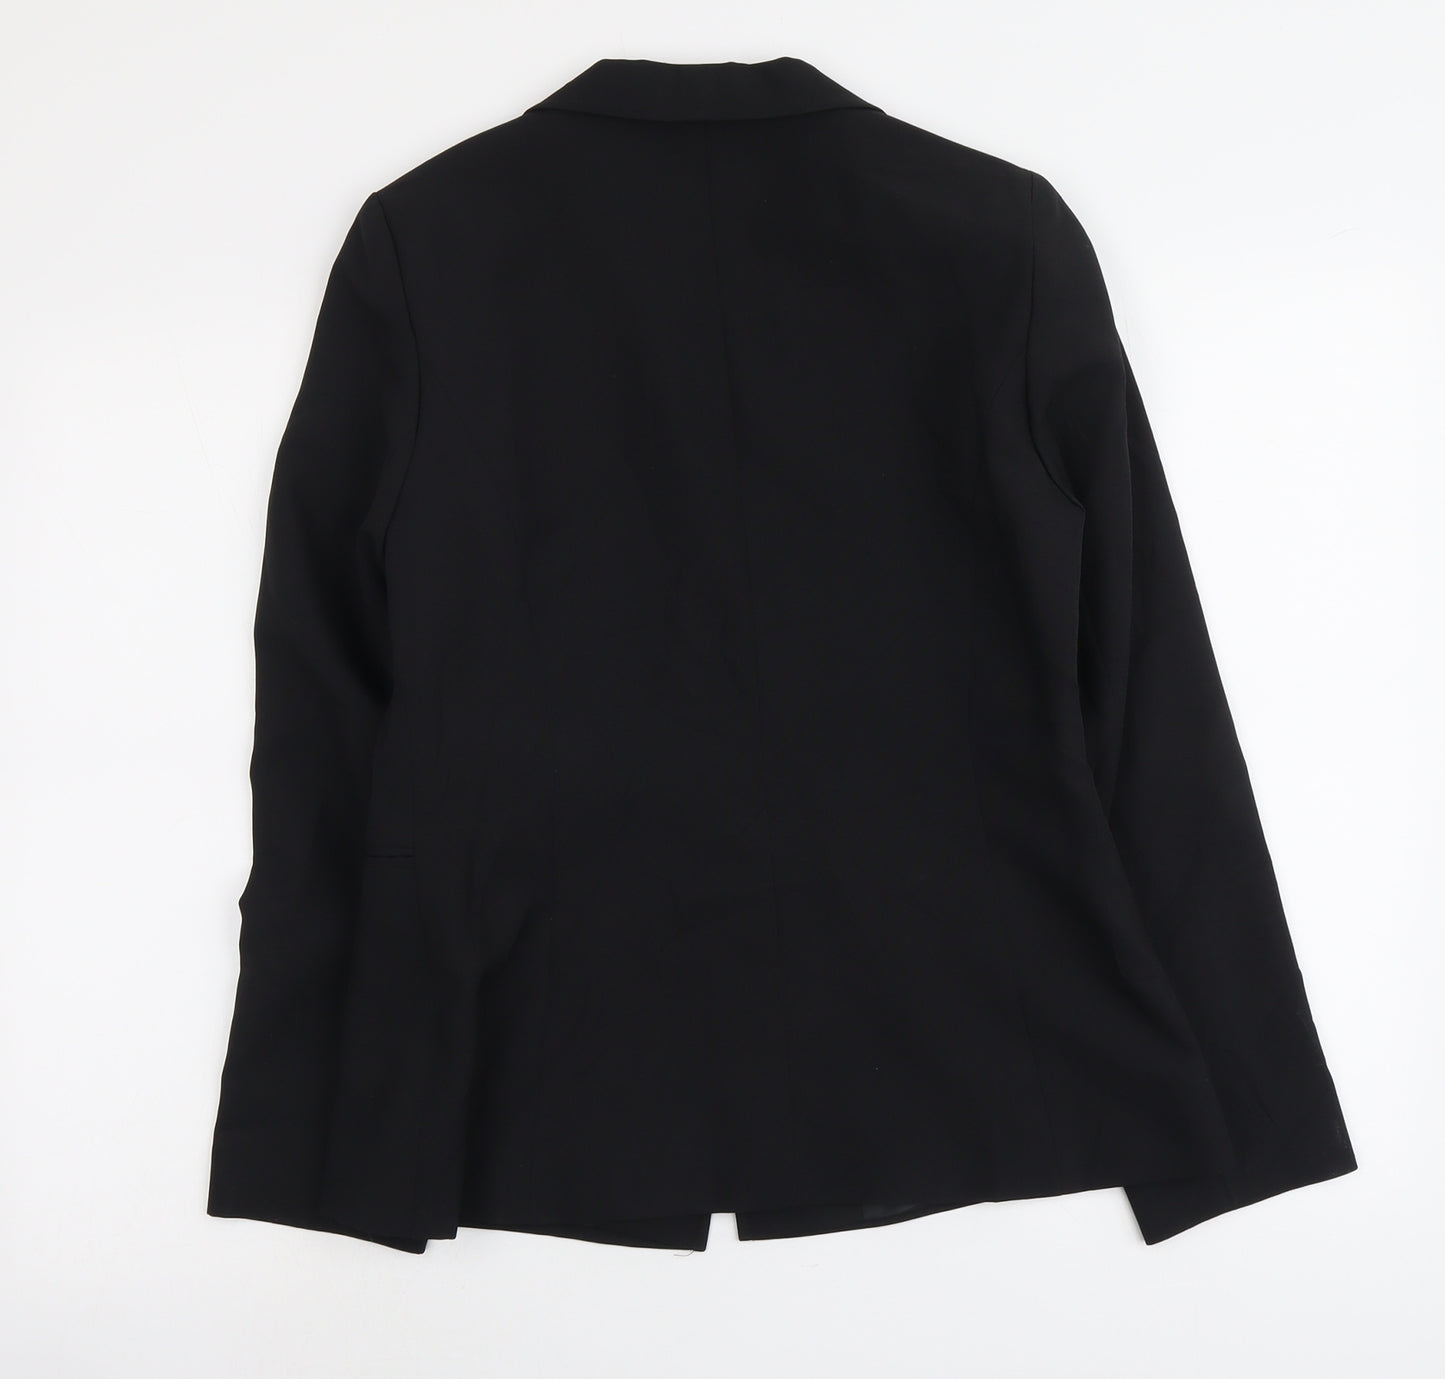 Bay Womens Black Polyester Jacket Suit Jacket Size 14